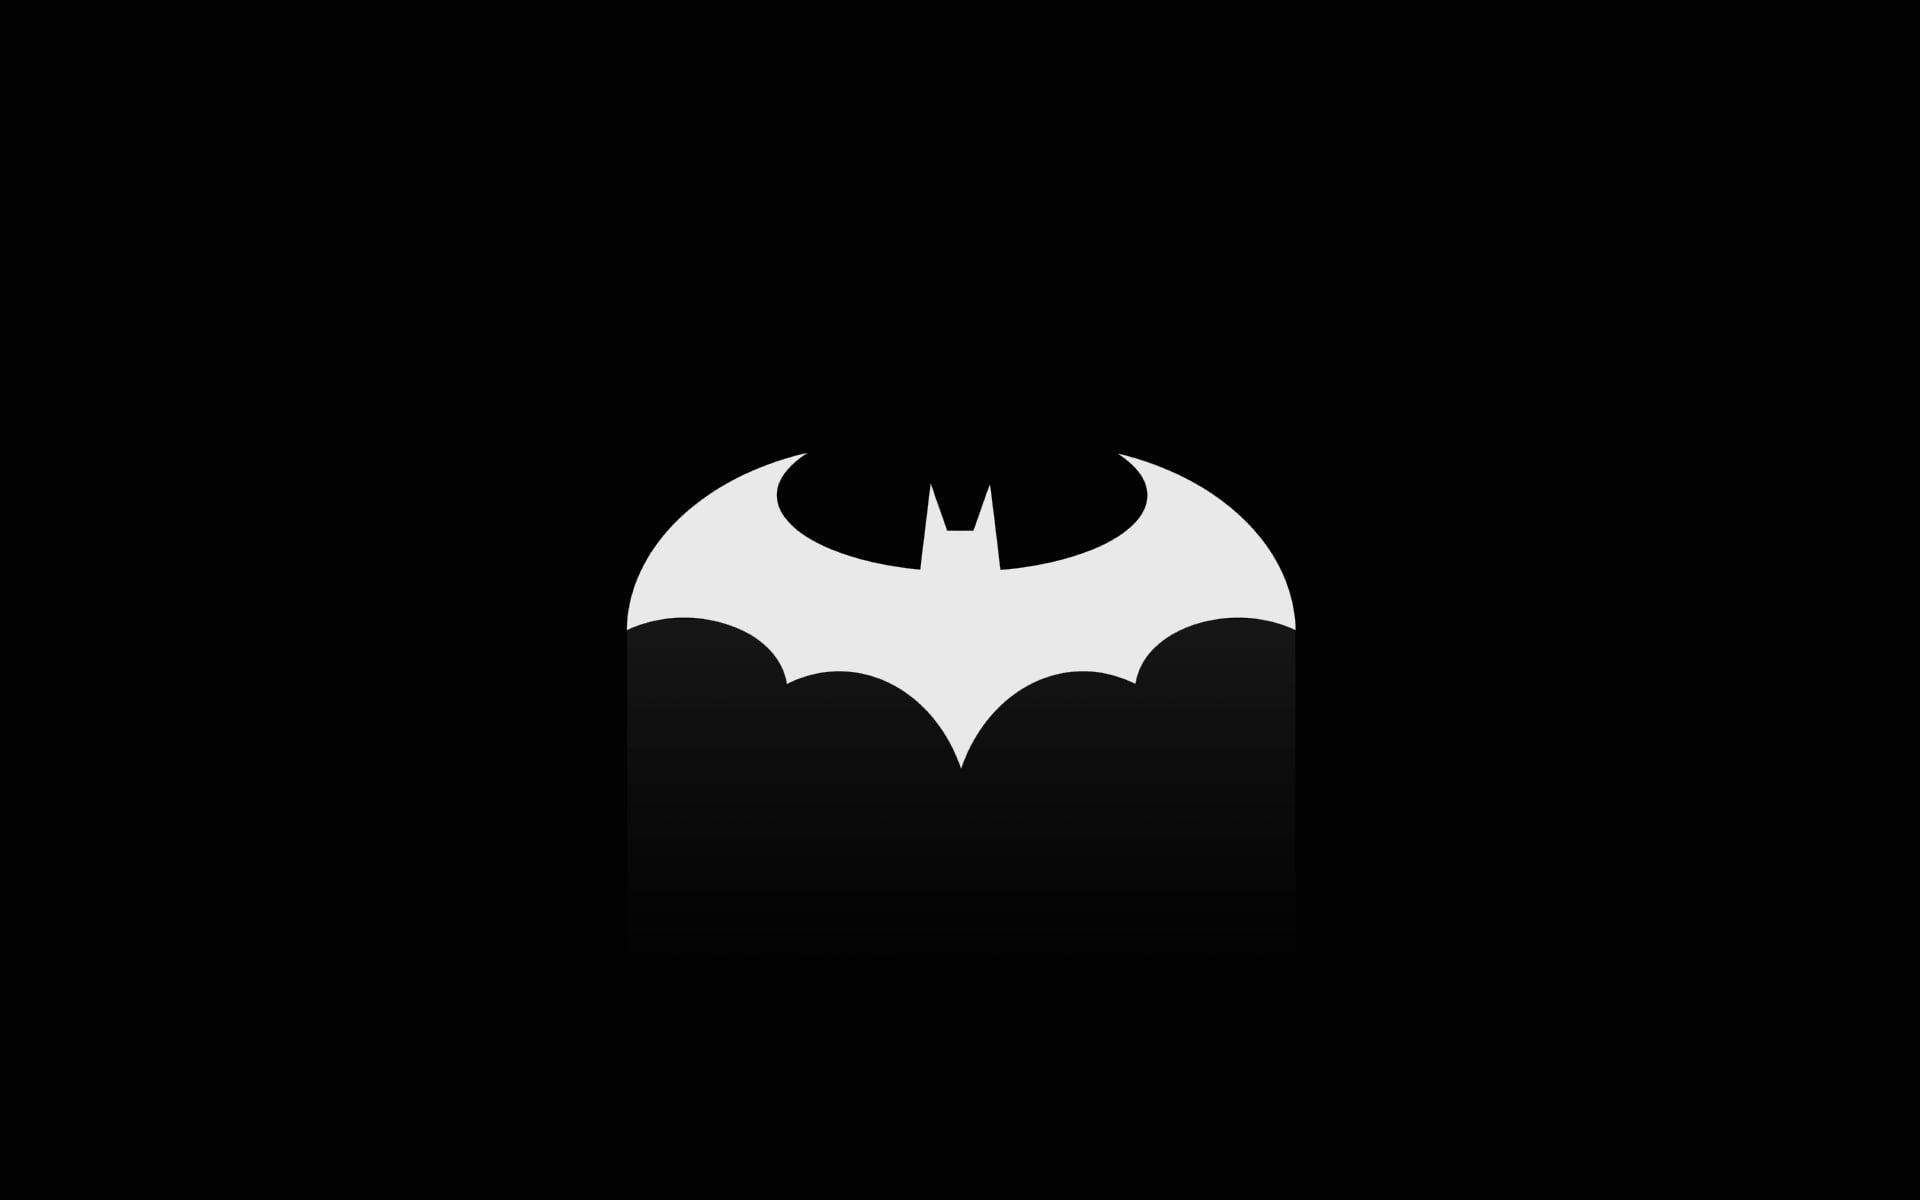 Digital Art Batman sign at 1280 x 960 size wallpapers HD quality